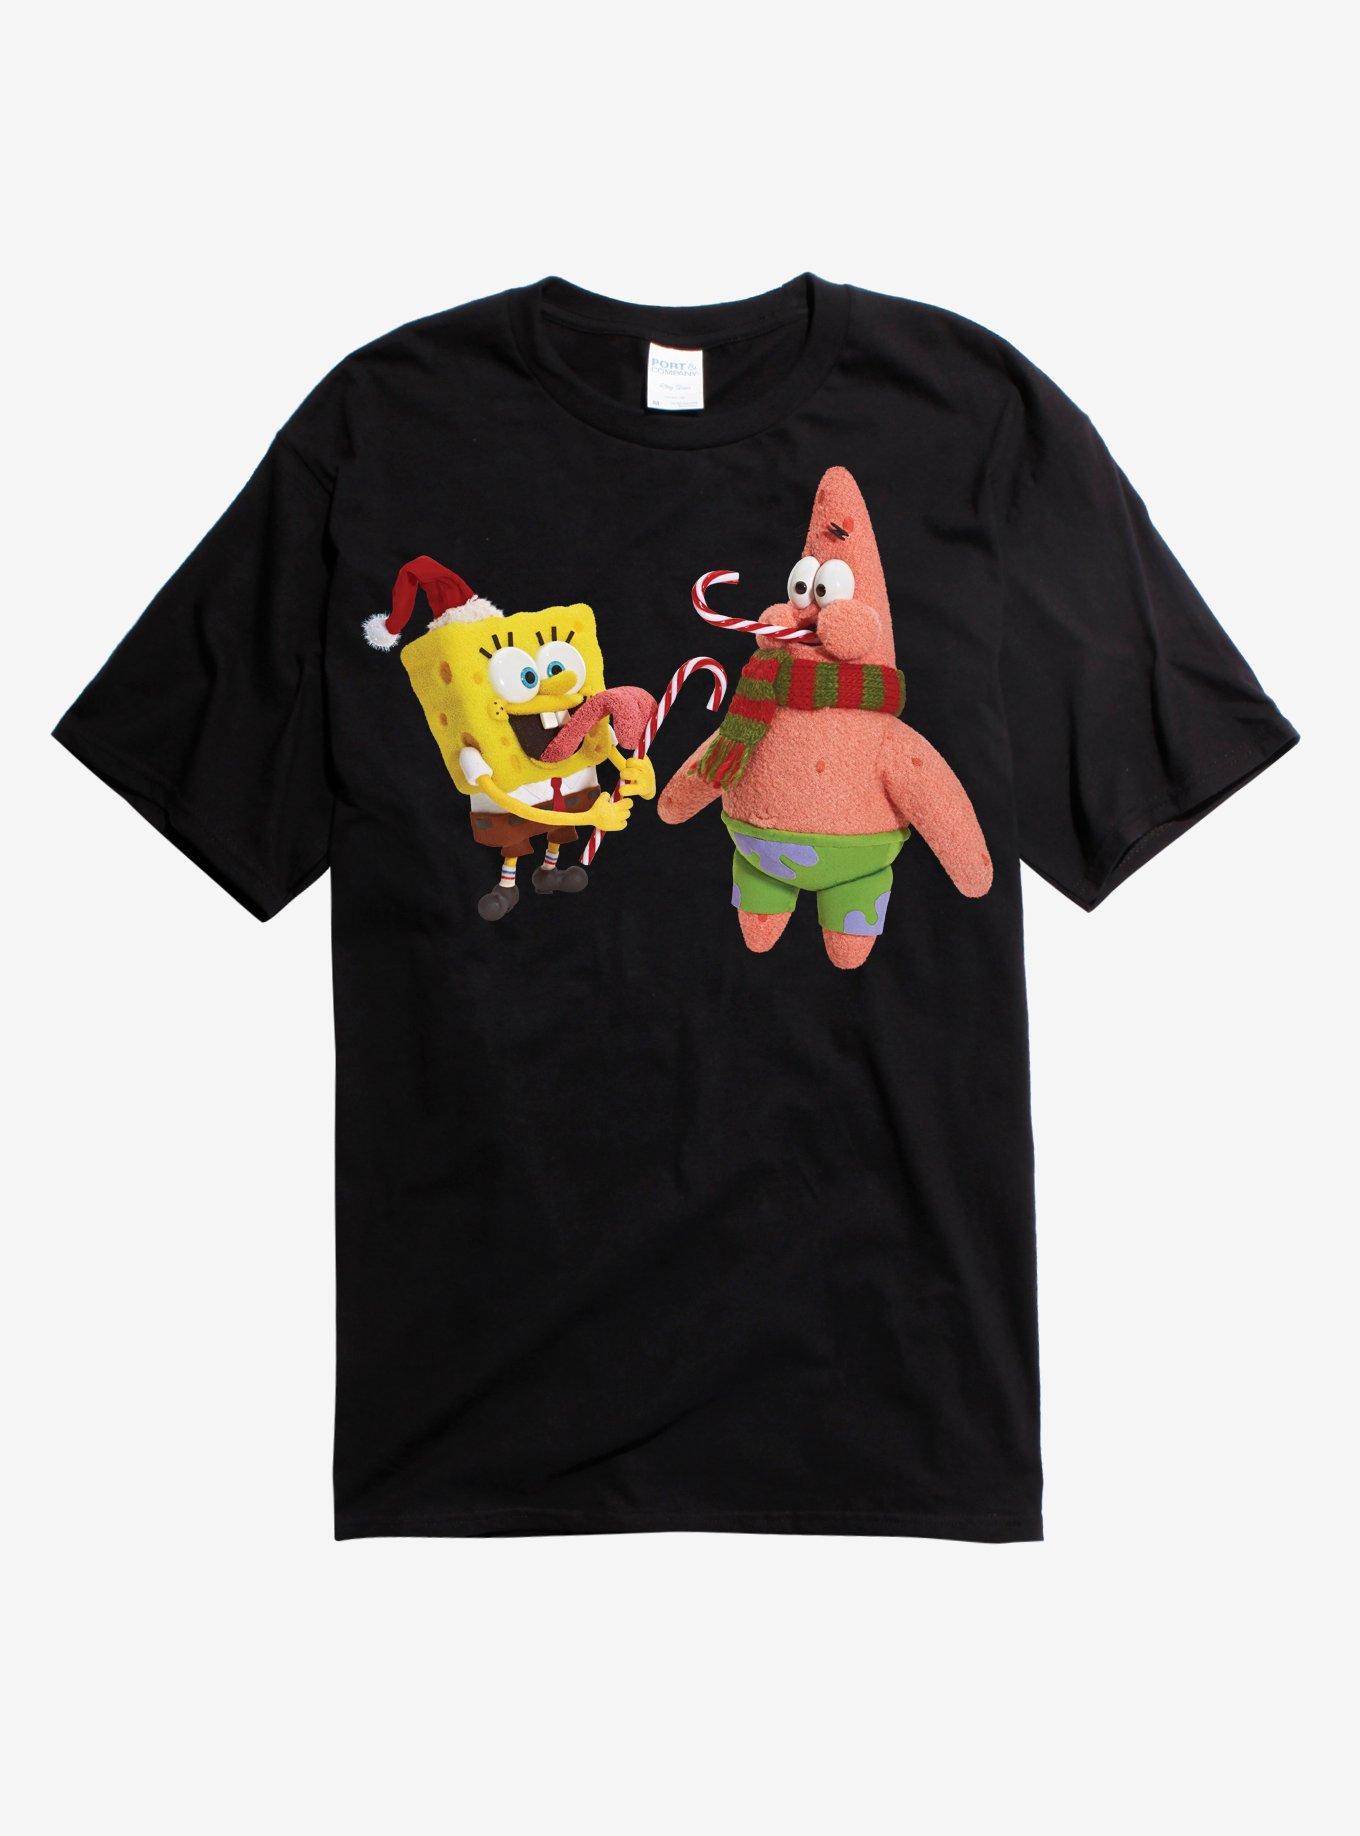 SpongeBob SquarePants Christmas Candy Canes T-Shirt